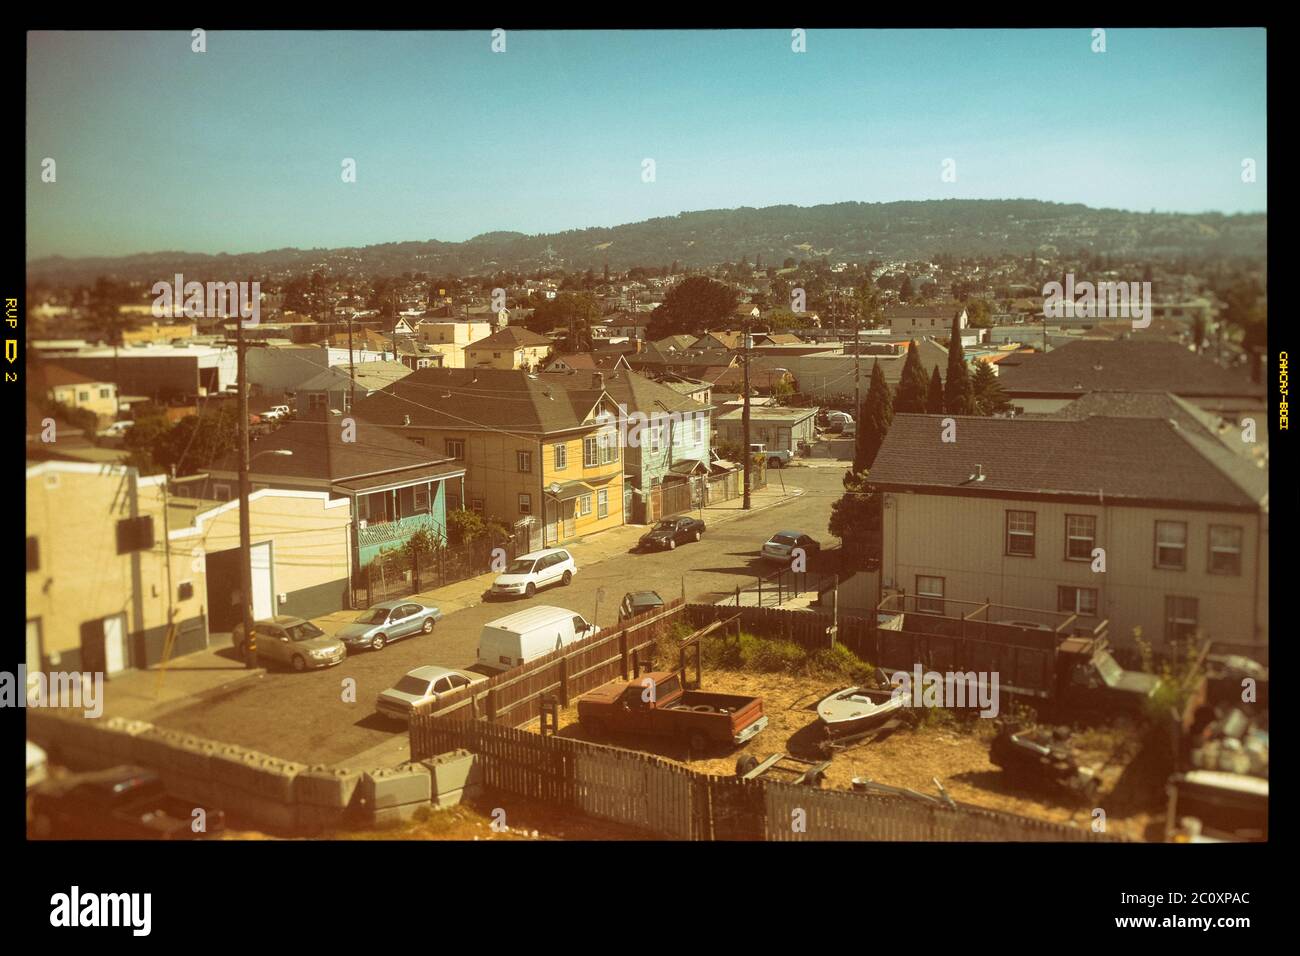 View of ghetto neighborhood in Oakland,Califonia Stock Photo - Alamy